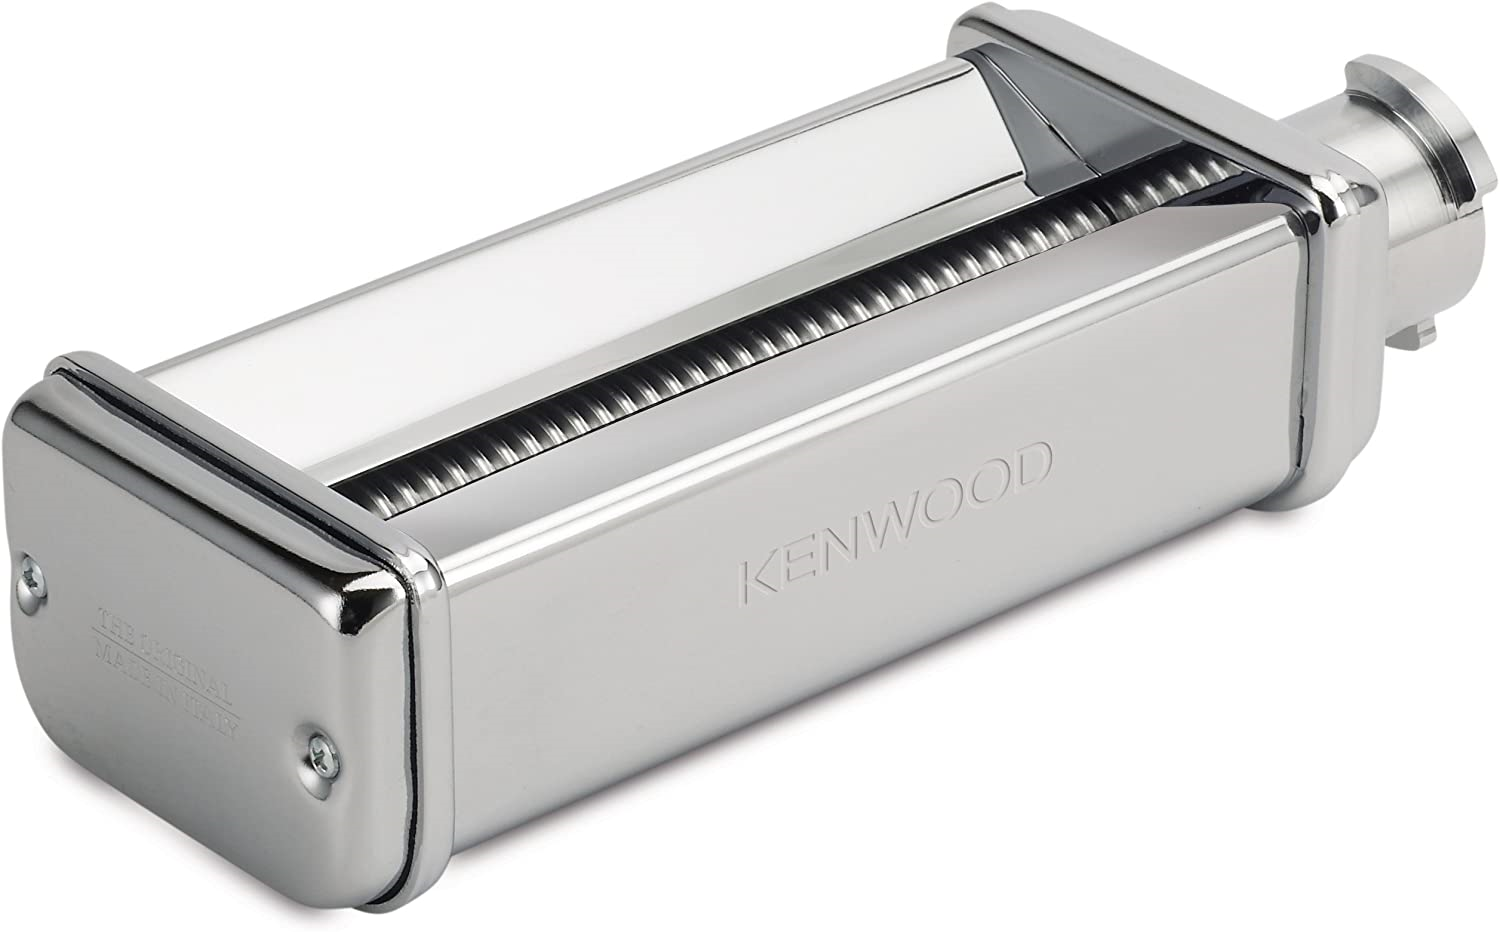 Kenwood Elektro KAX981ME - Fettuccine-Aufsatz - für Standmixer Teigwareneinsatz 